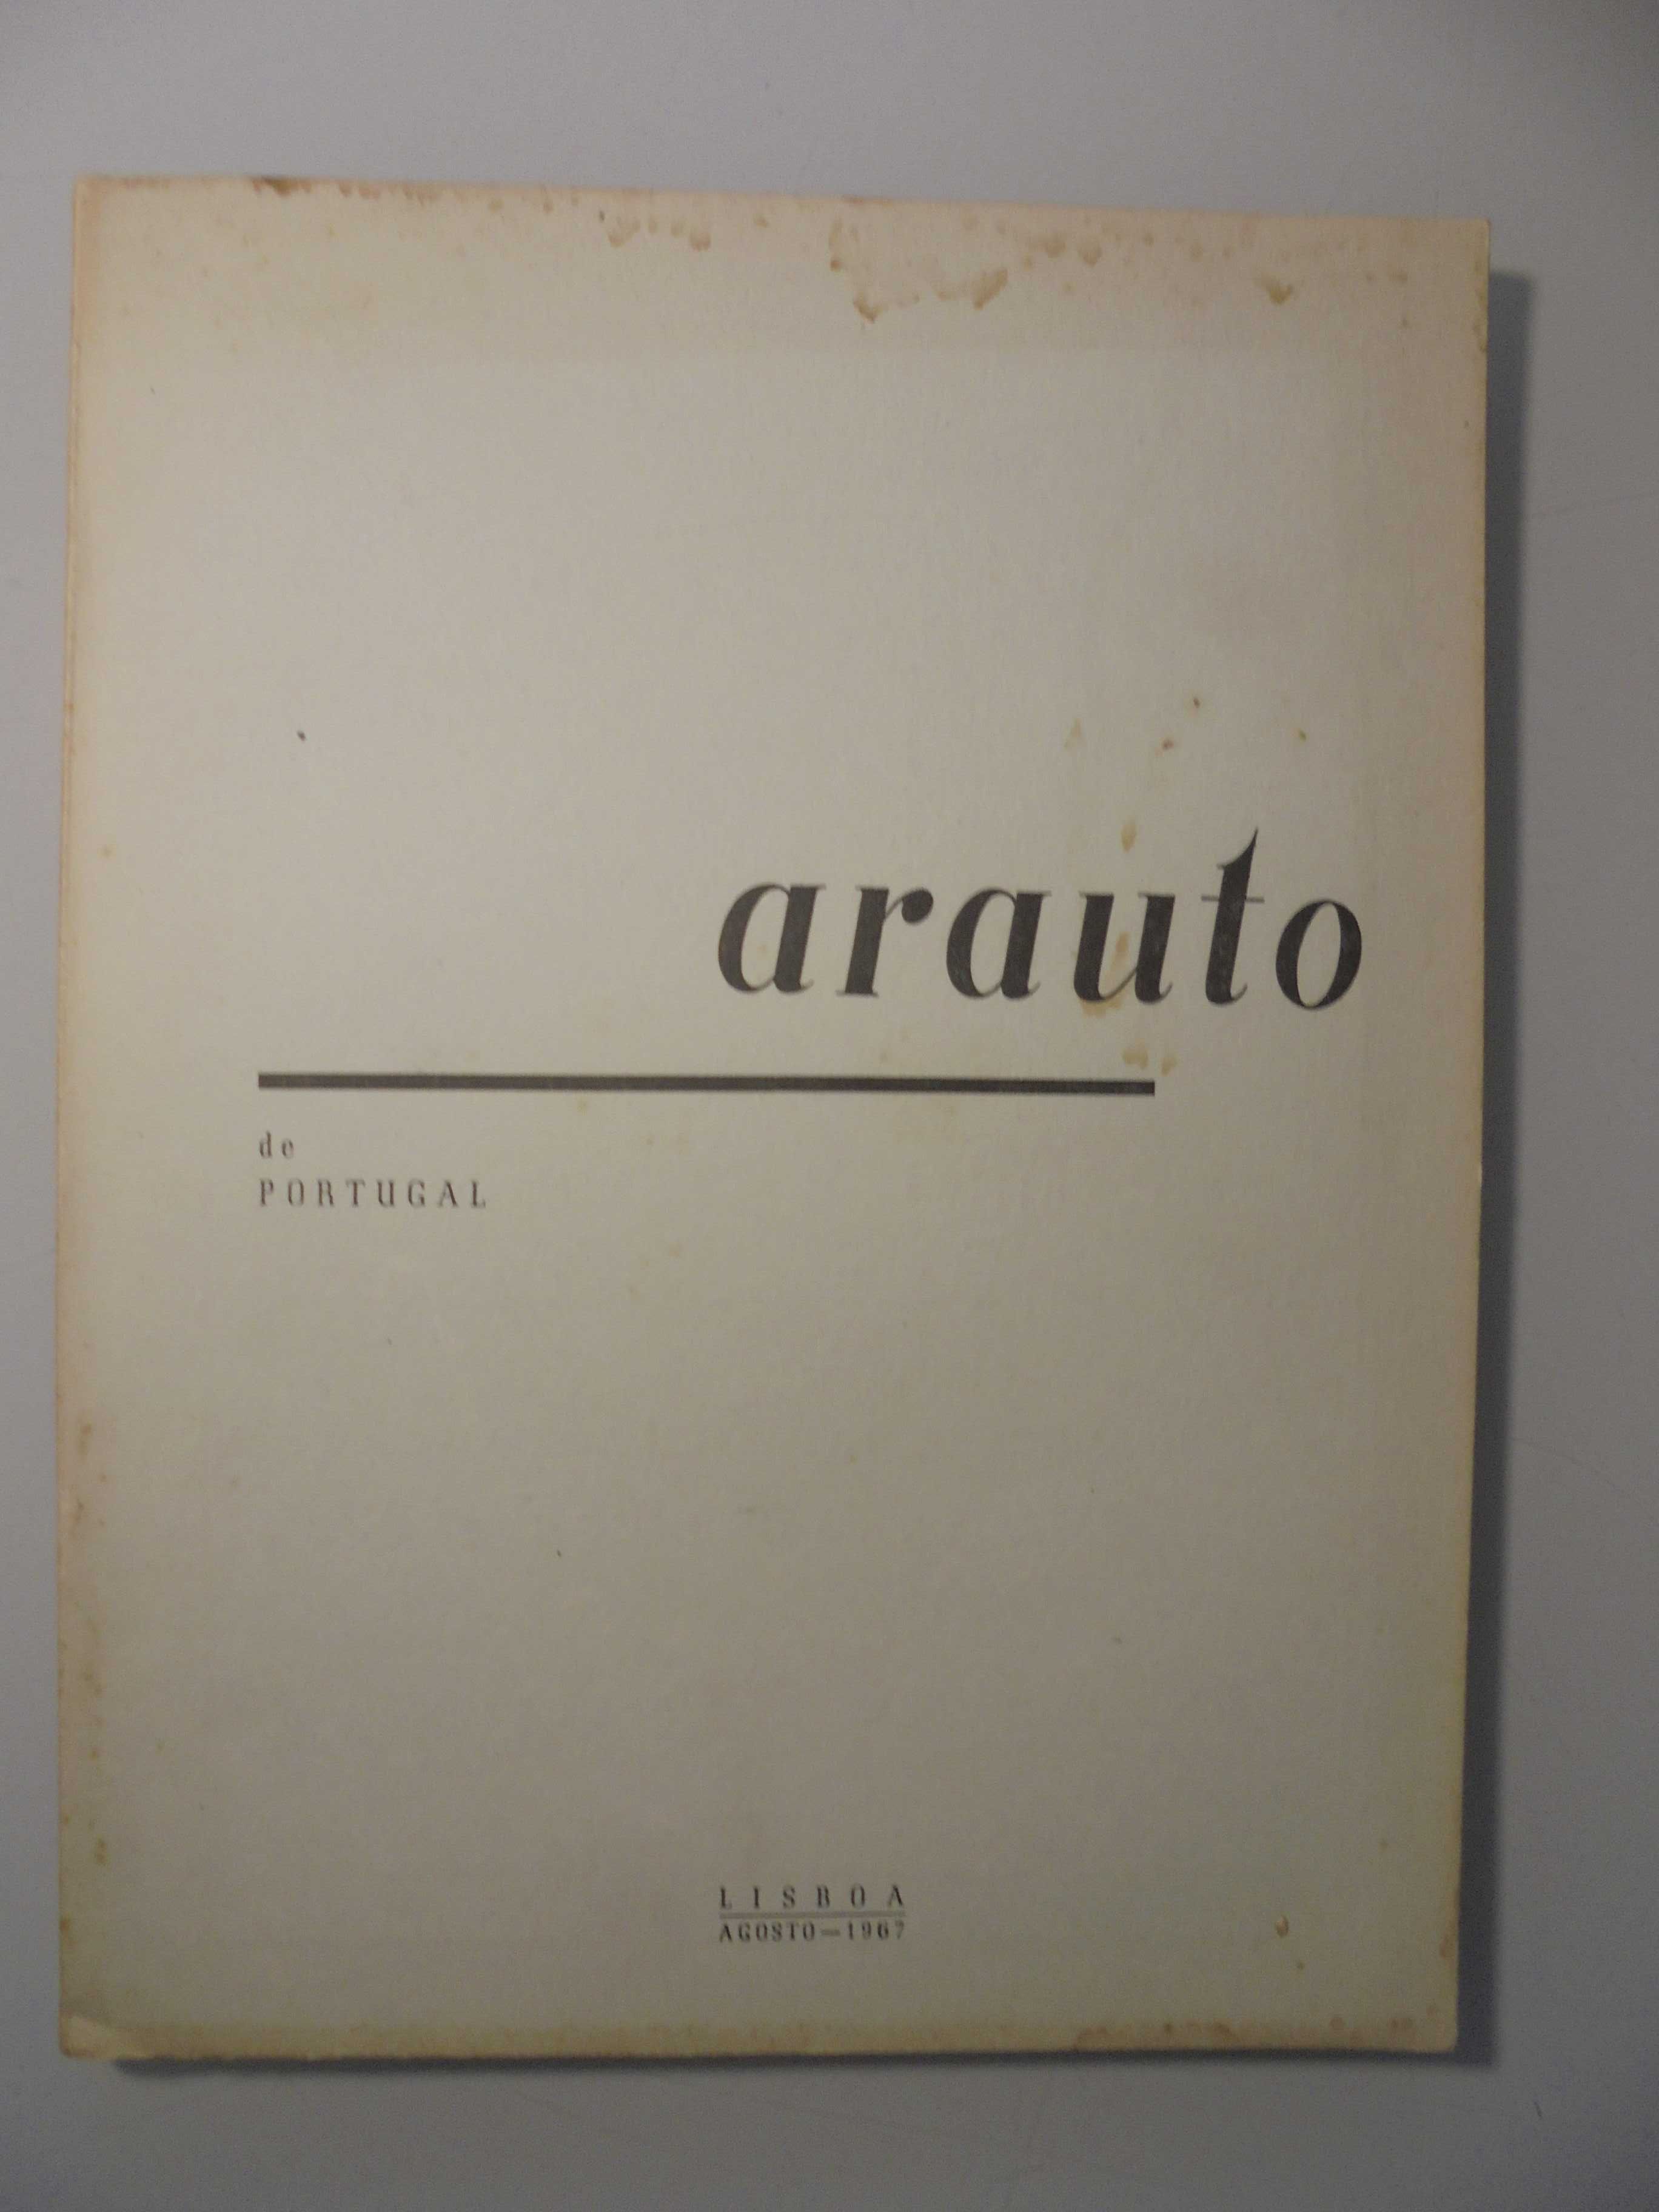 Arauto de Portugal;Gabinete de Estudos Heráldicos e Genealógicos